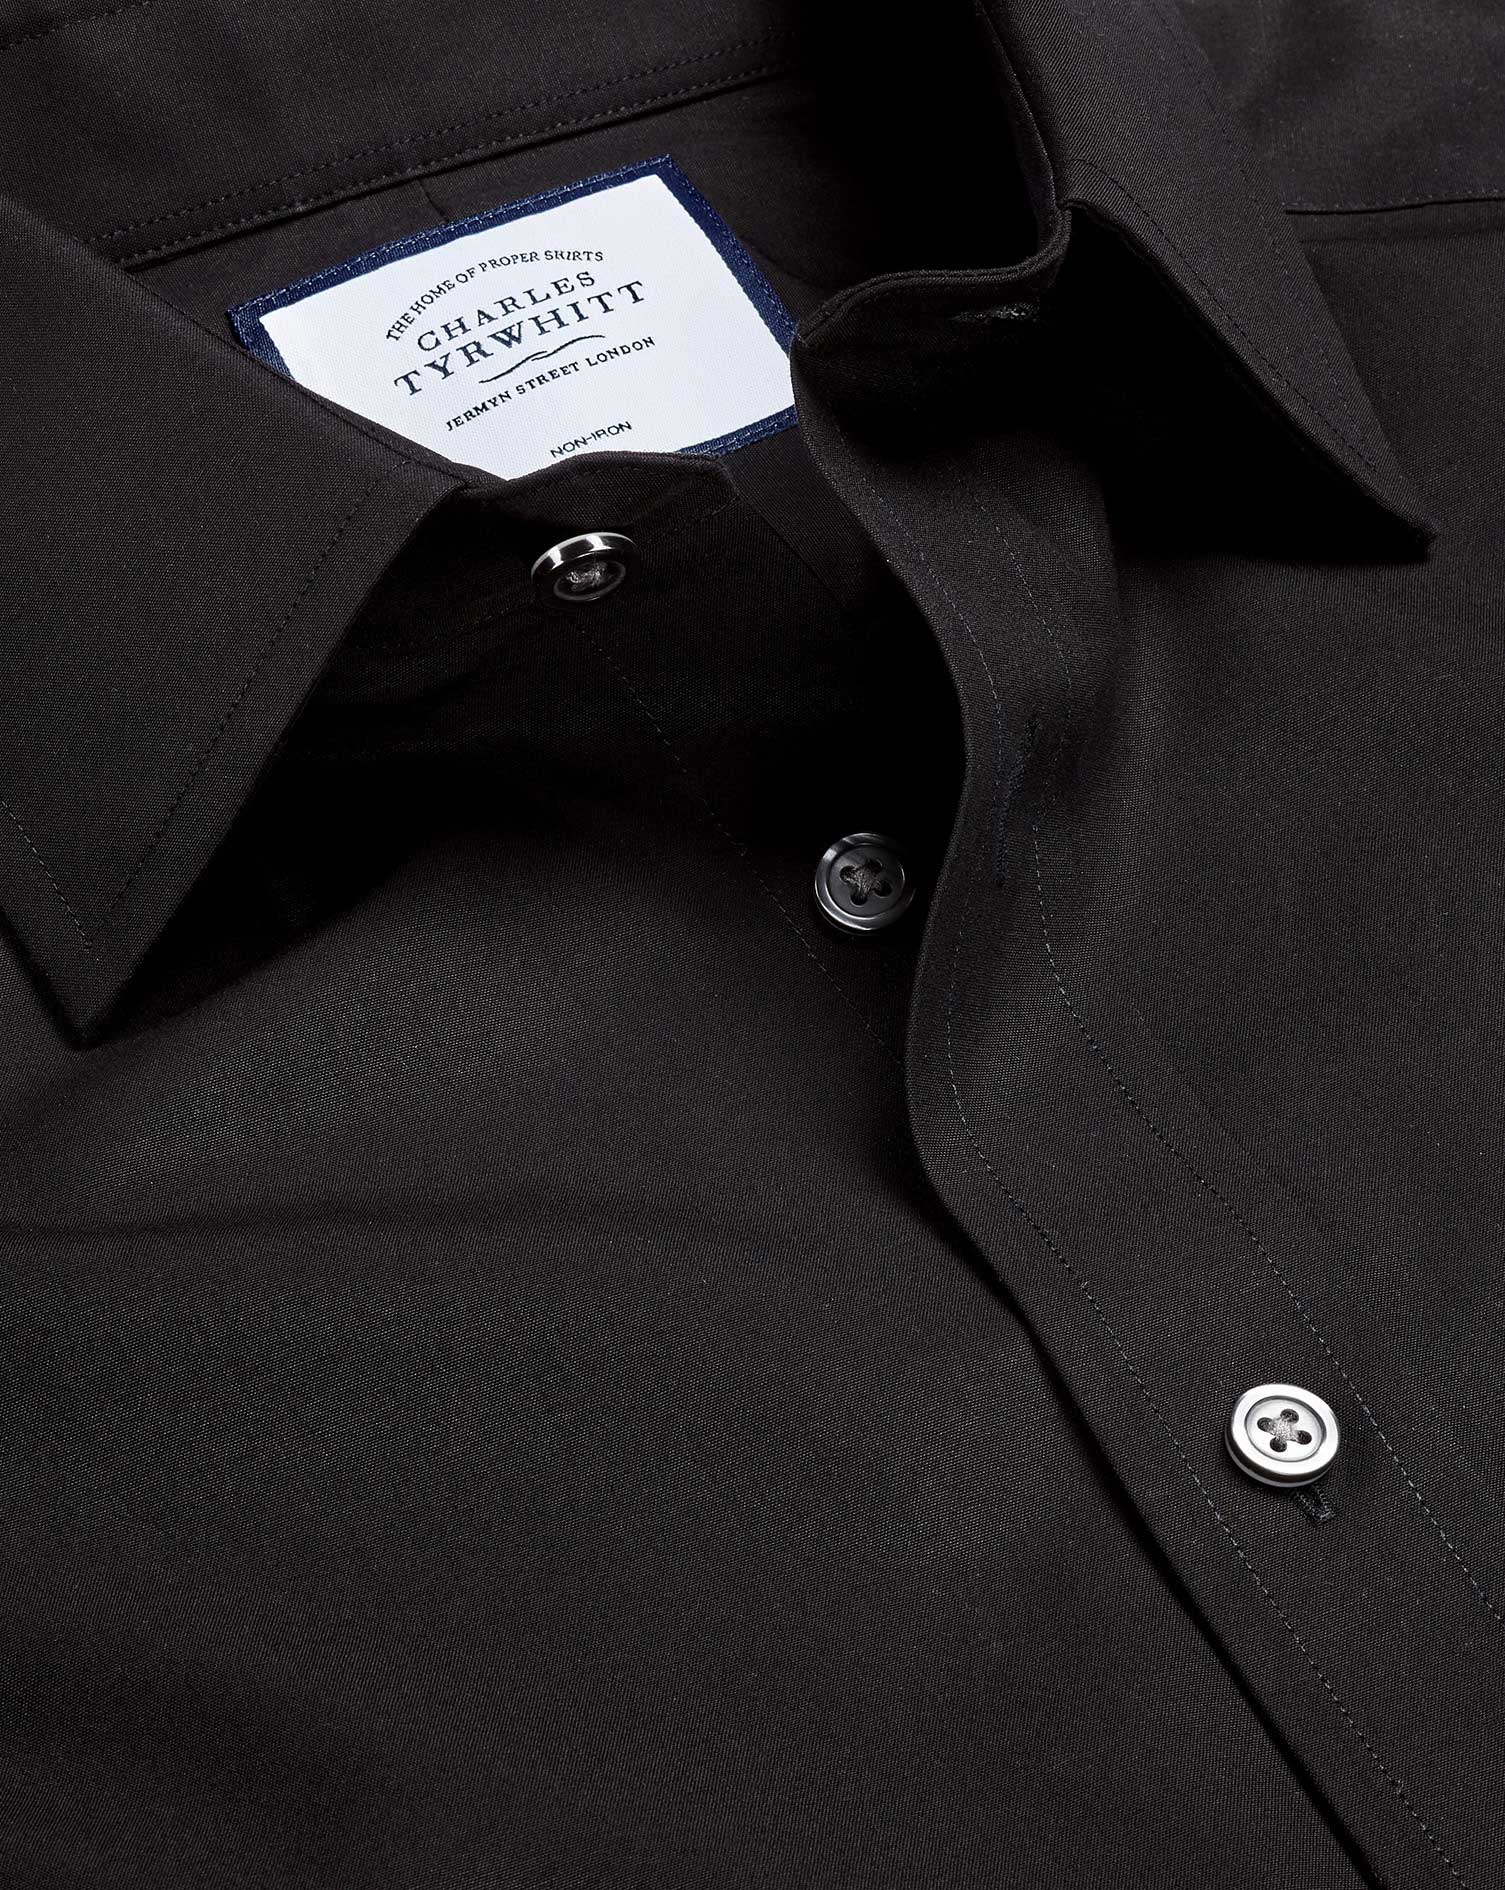 Men's Charles Tyrwhitt Non-Iron Poplin Dress Shirt - Black French Cuff Size Medium Cotton
